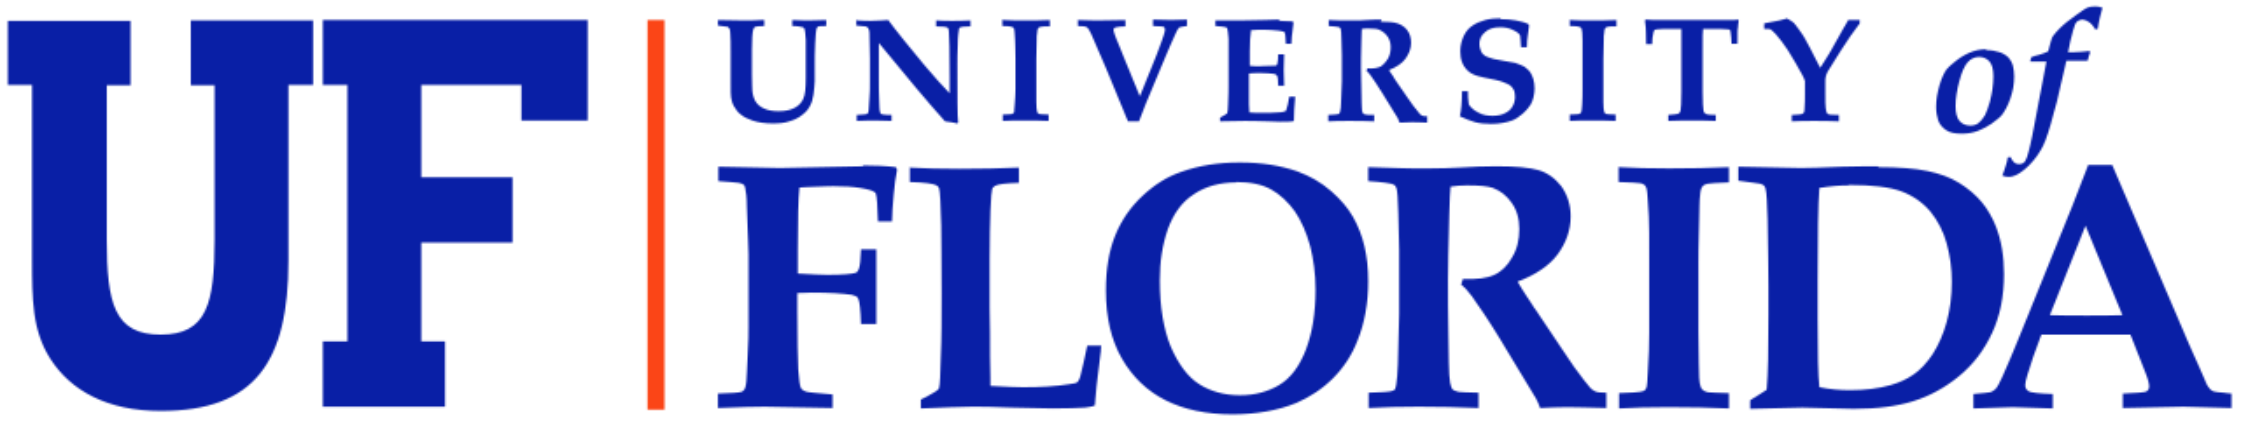 University-of-florida